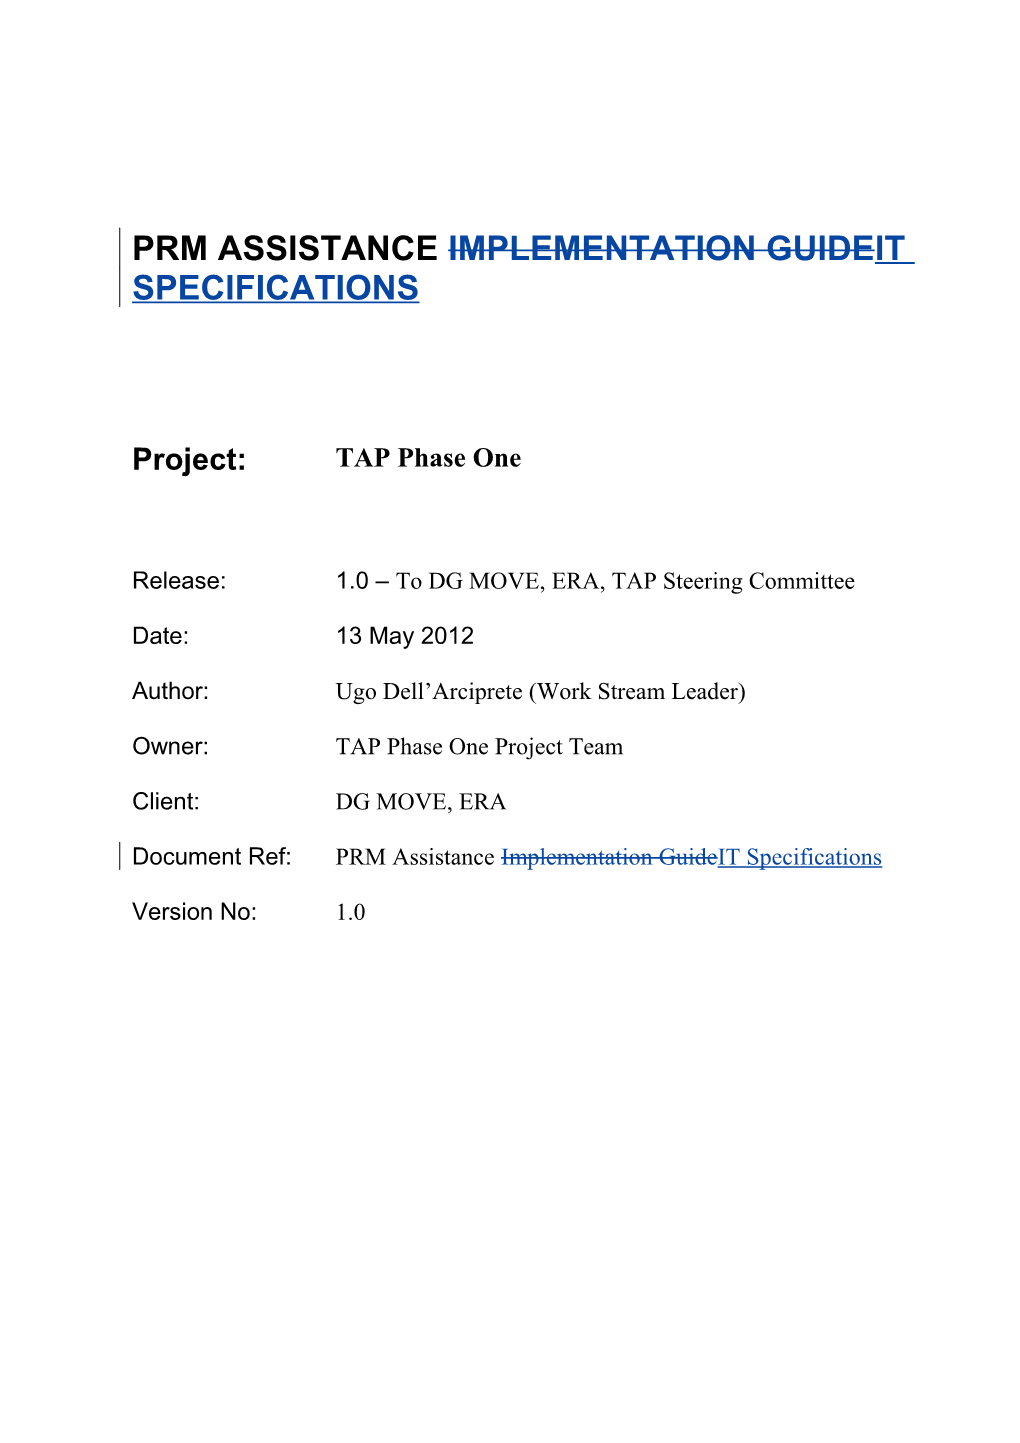 PRM Assistance Implementation Guideit Specificationsrelease 1.0